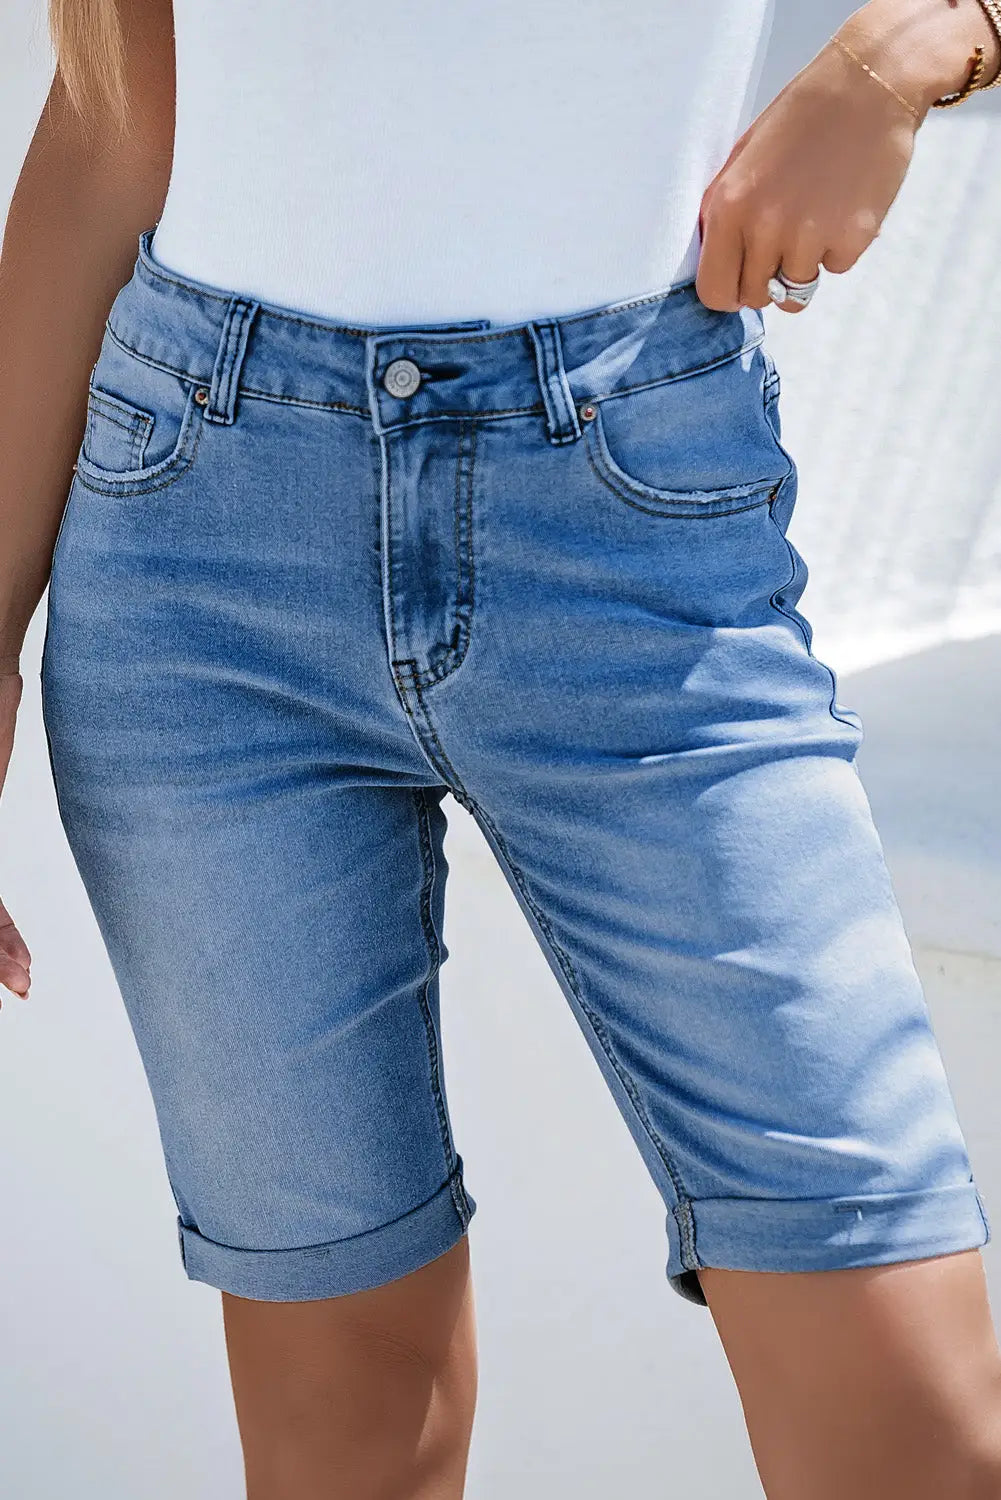 Sky blue acid wash roll-up edge bermuda short jeans - 6 / 70% cotton + 28.5% polyester + 1.5% elastane - denim shorts